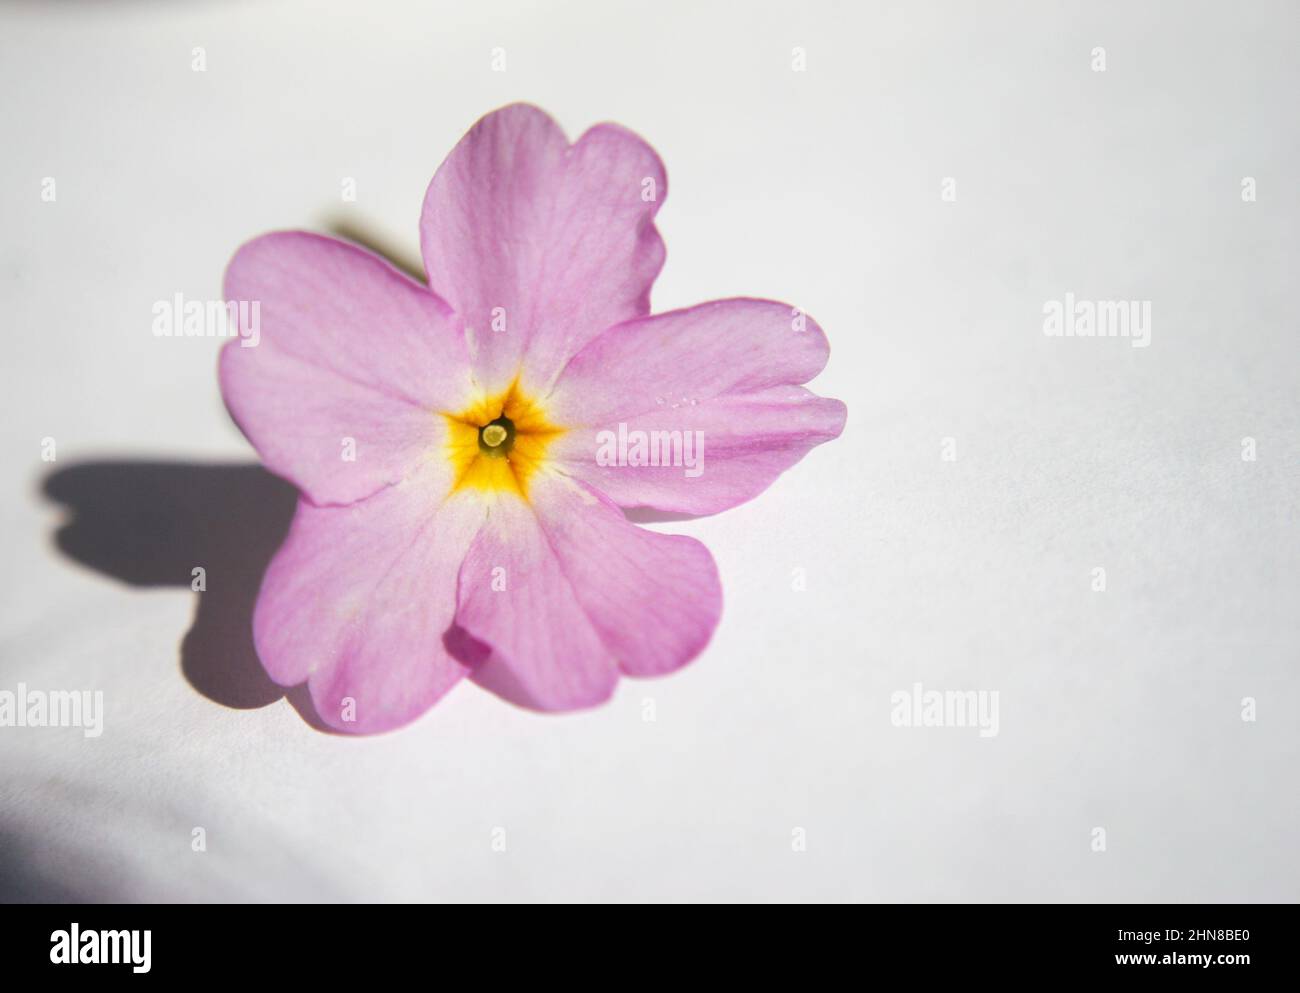 Primrose or common primrose or English primrose (Primula vulgaris) pink flower close up Stock Photo